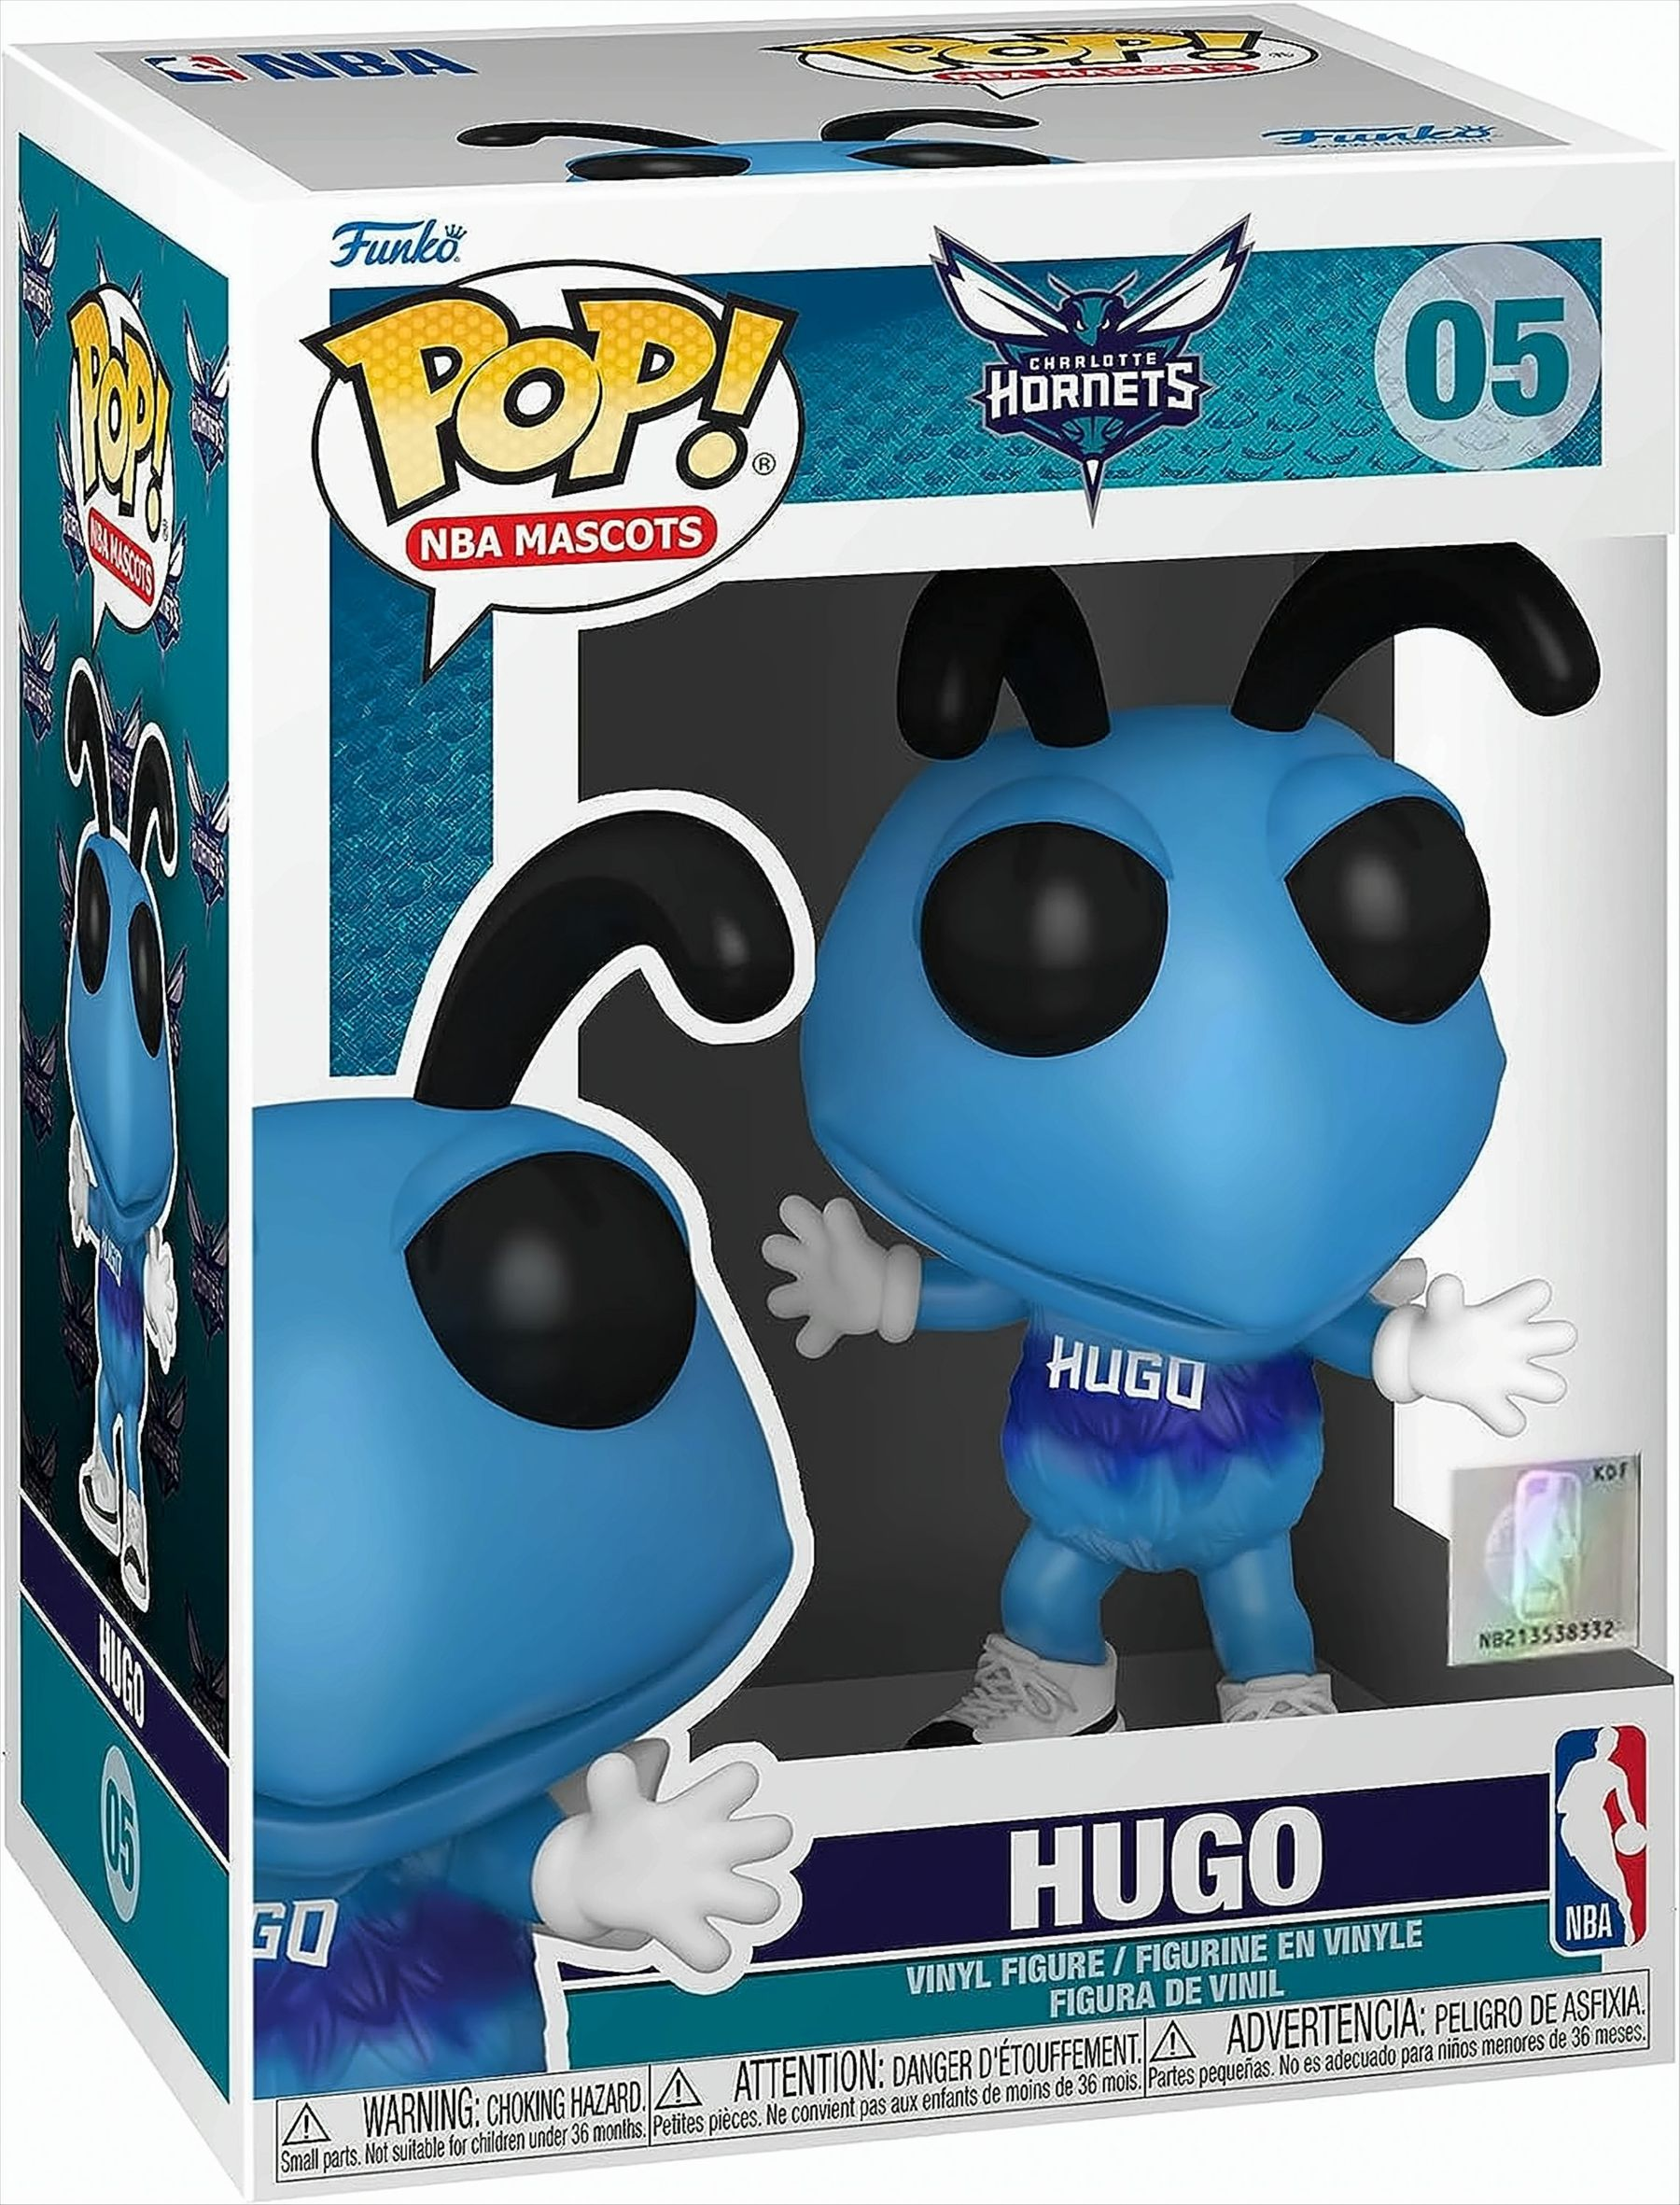 - Hugo/Charlotte POP - Mascots NBA Hornets